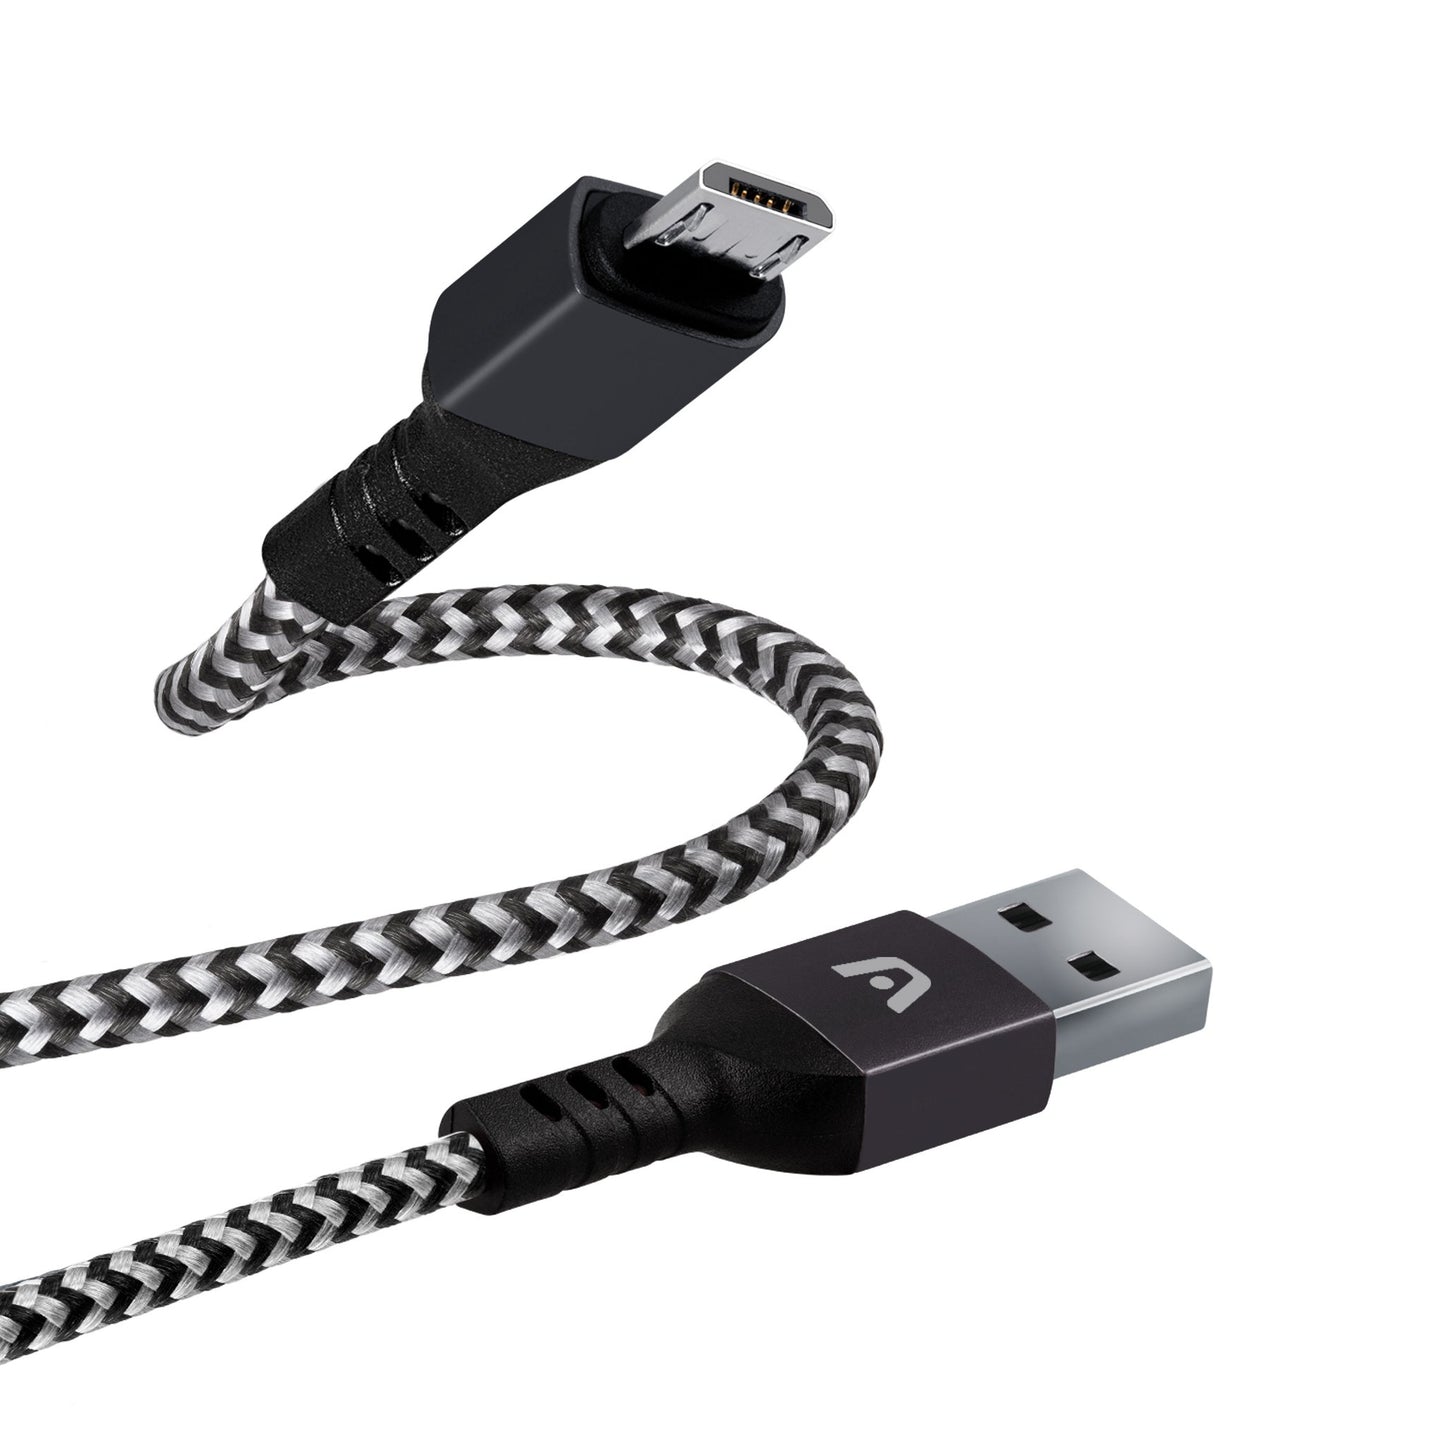 CABLE MICRO USB TO USB 2.0 NYLON BRAIDED DURA FORM